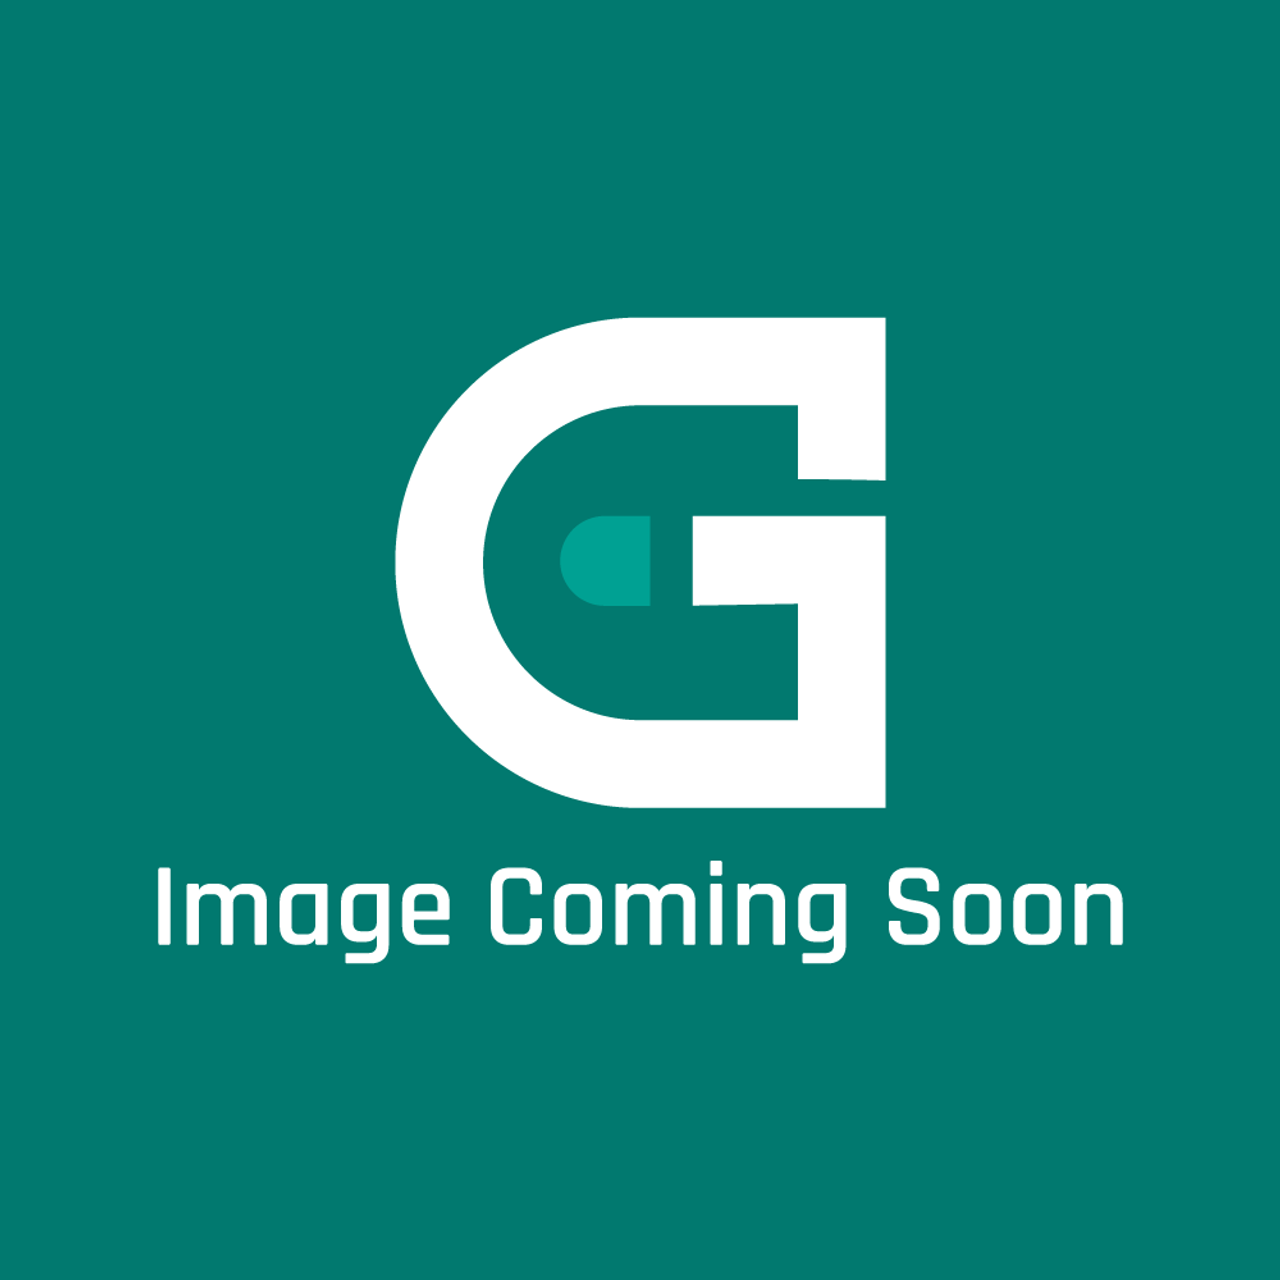 GE Appliances WR01X42845 - Drain Plug - Image Coming Soon!